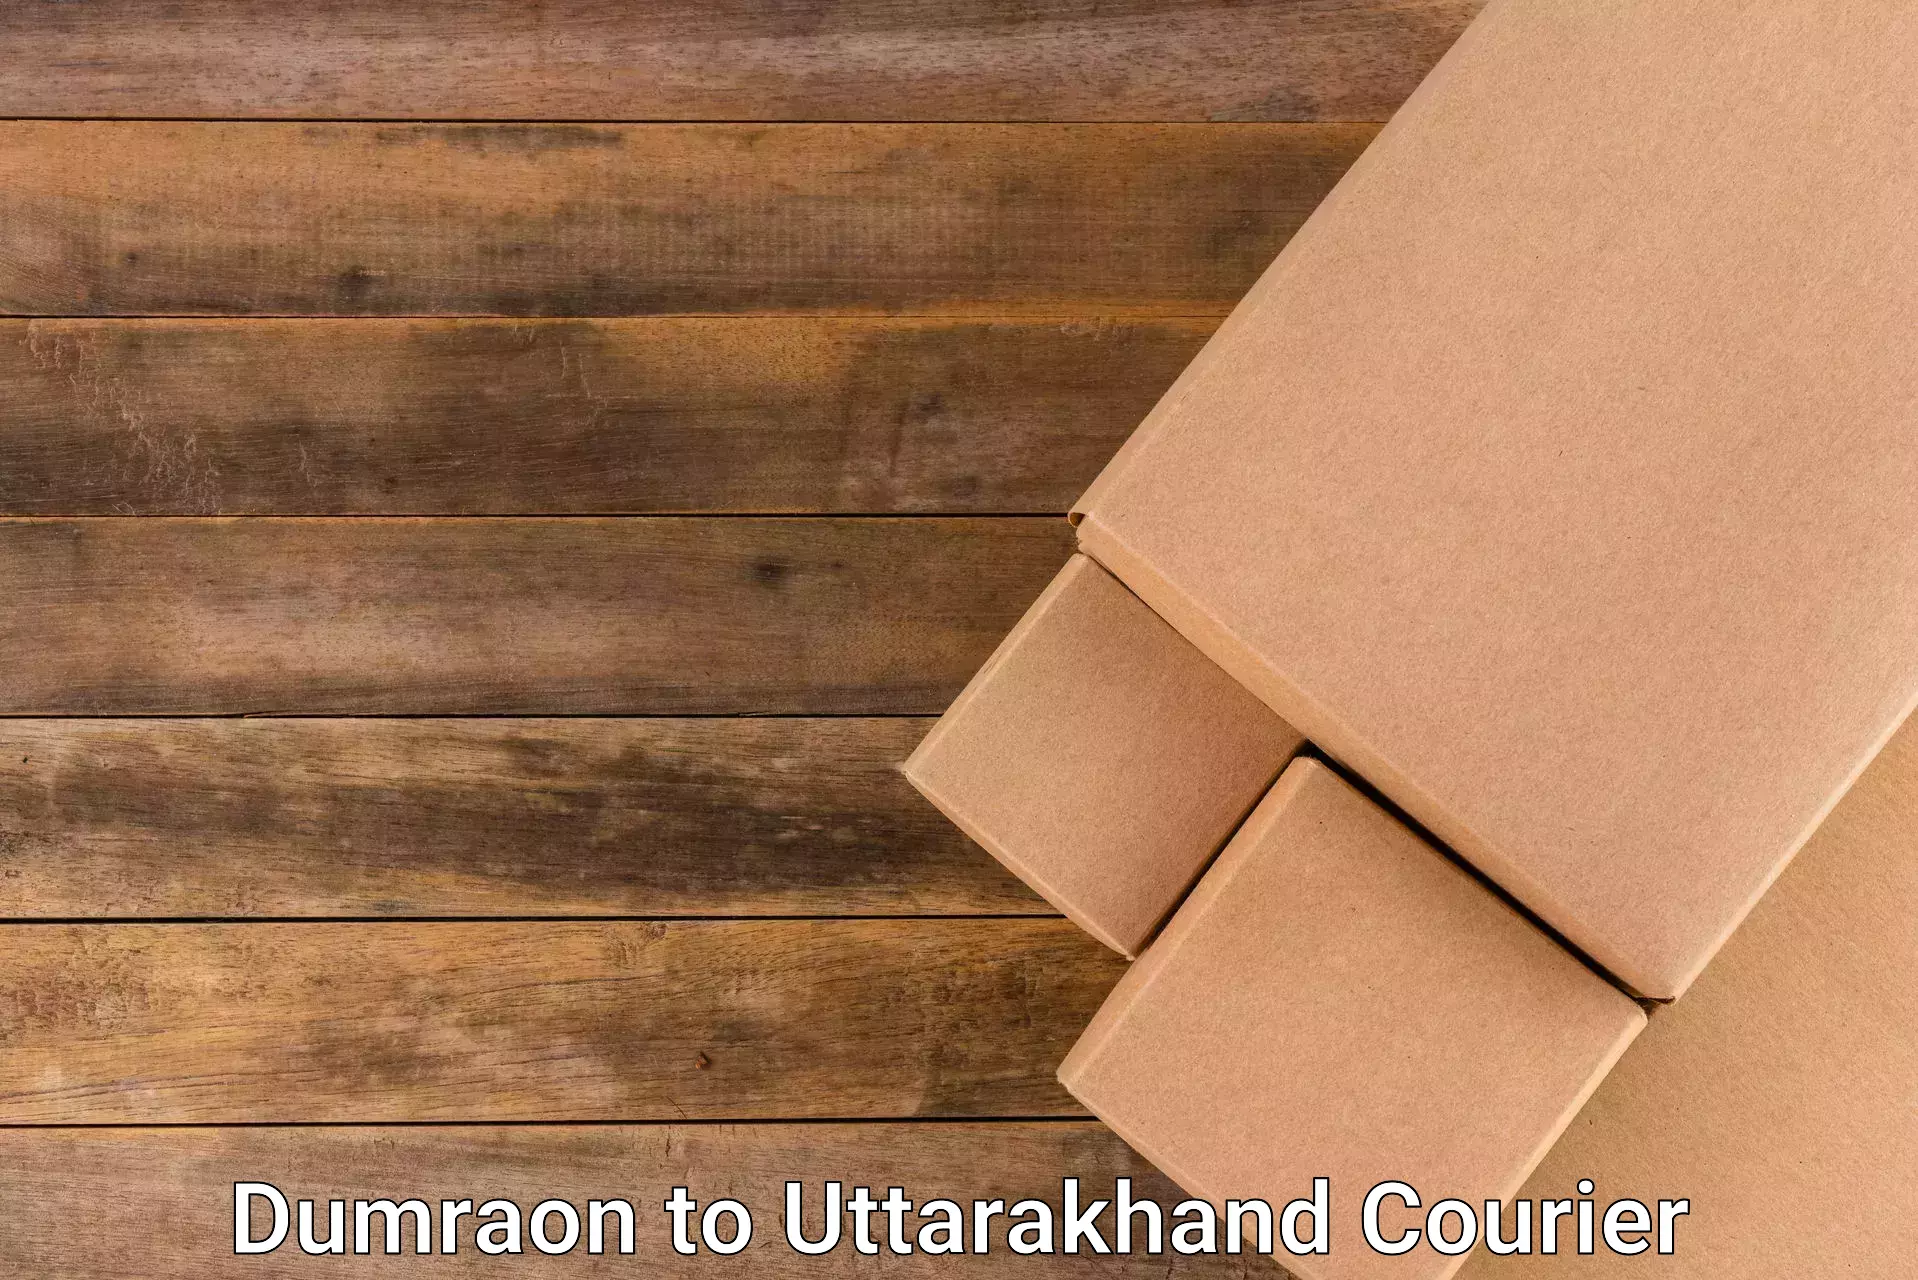 Courier service comparison in Dumraon to Gairsain